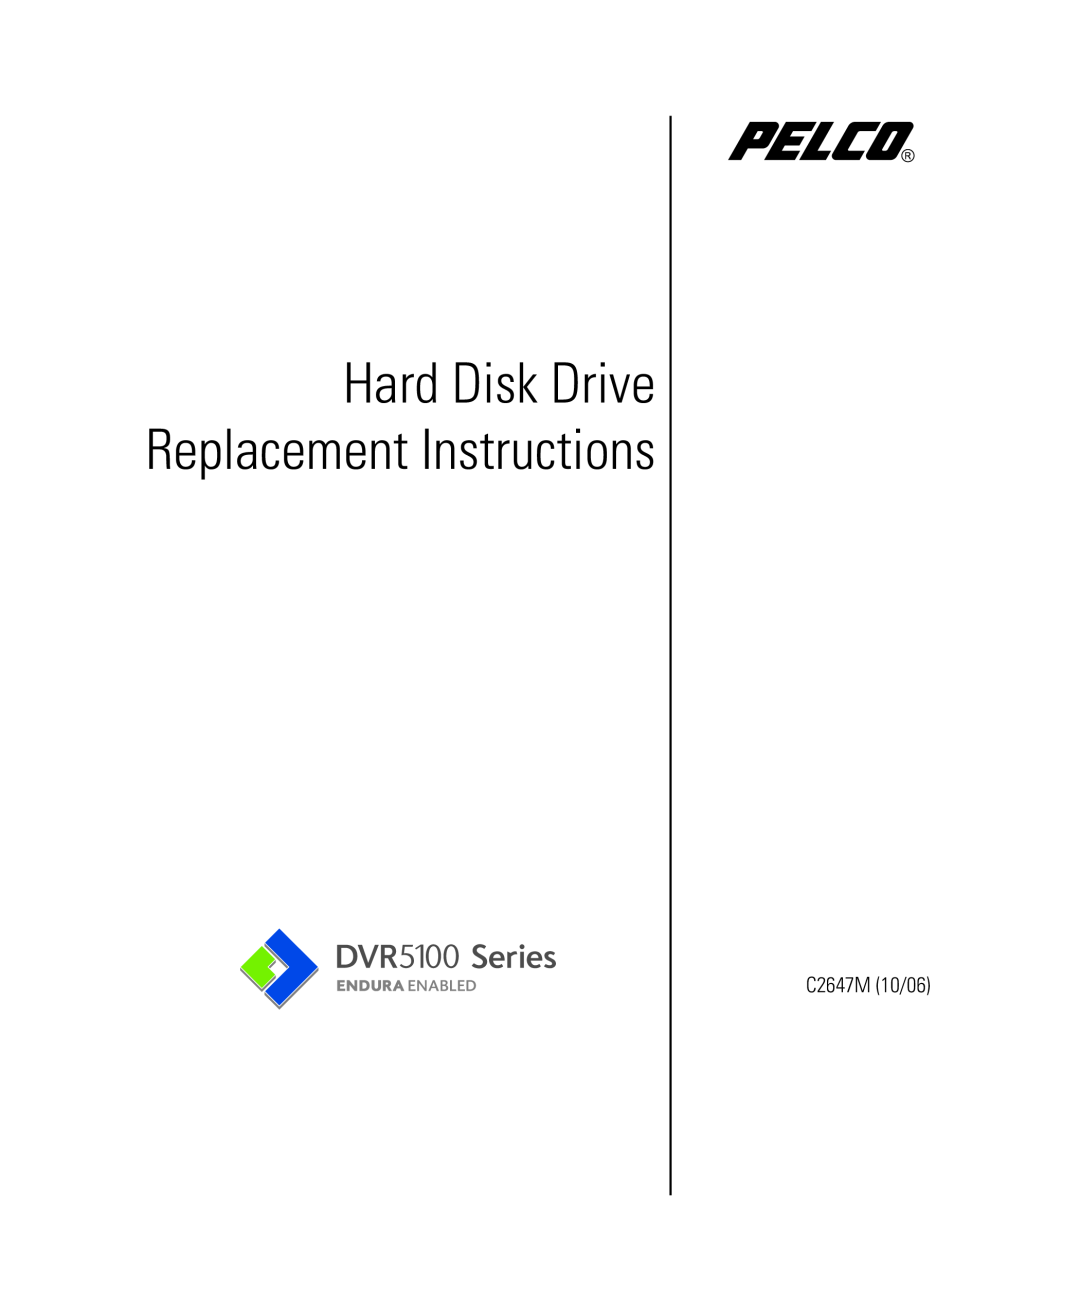 Pelco DVR5KUP-250-1TB, DVR5KUP-500-800, DVR5KUP-250-800, 5100 manual C2647M 10/06, Hard Disk Drive Replacement Instructions 